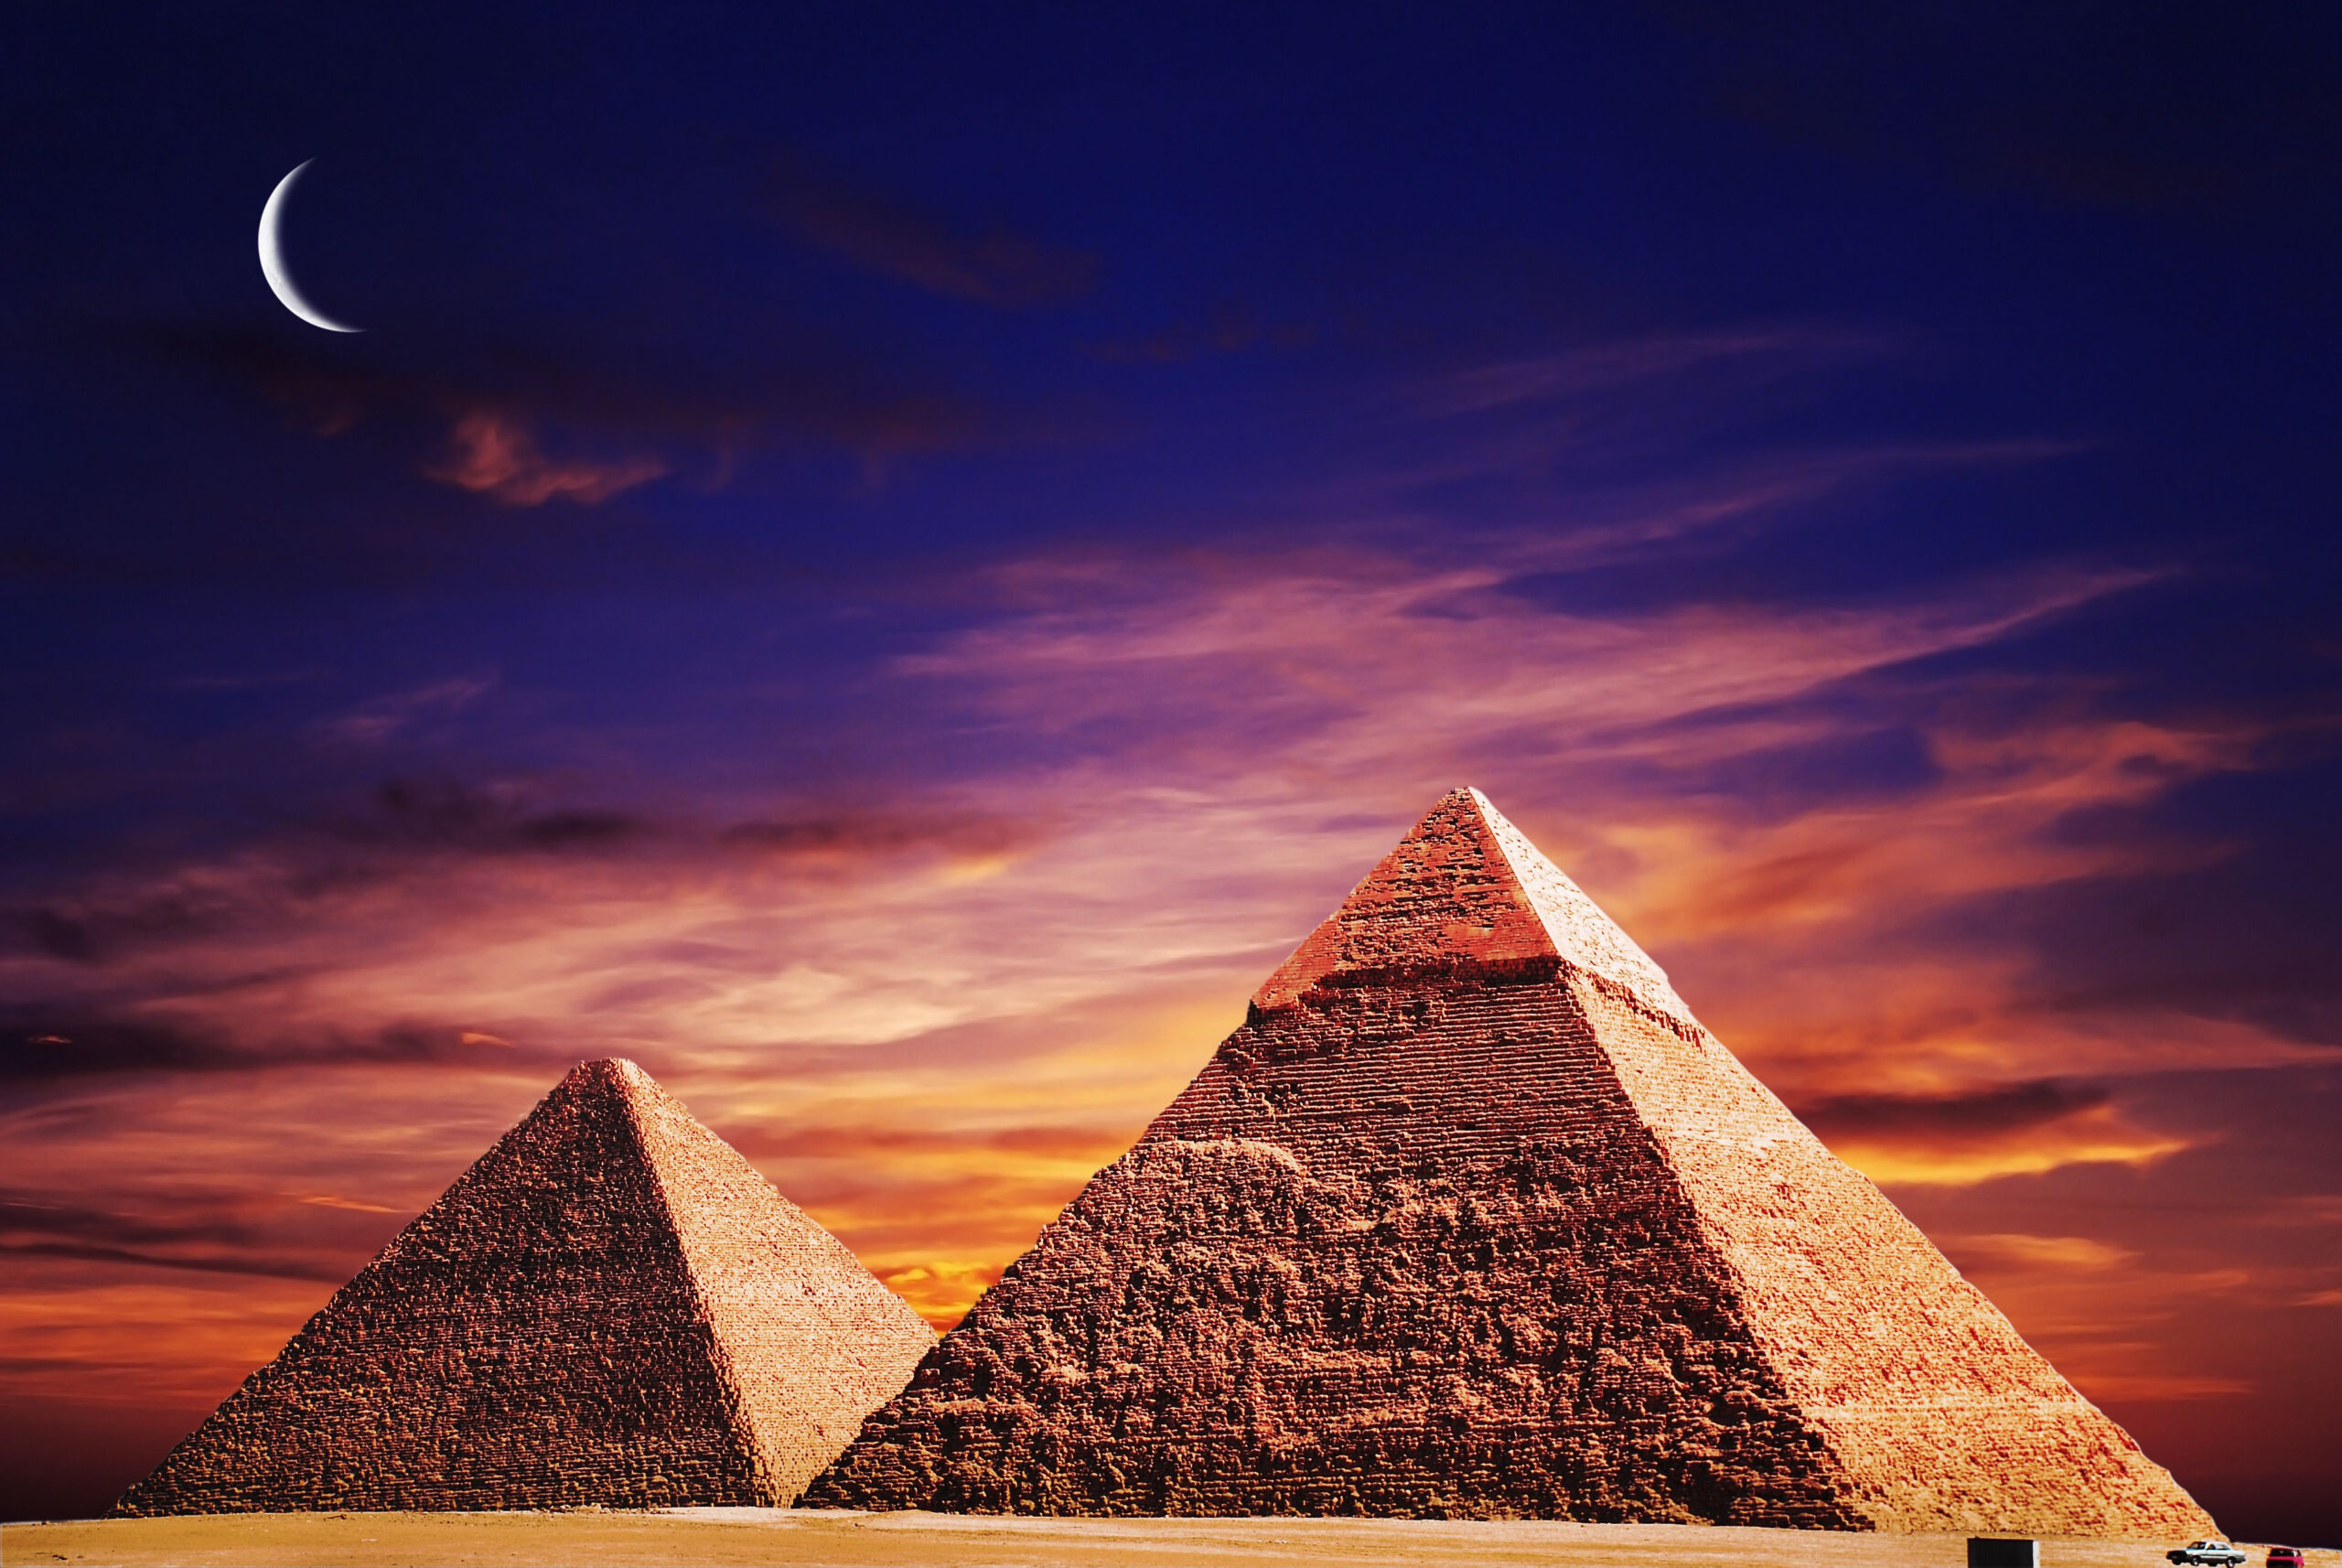 7. The Pyramids of Giza, Egypt